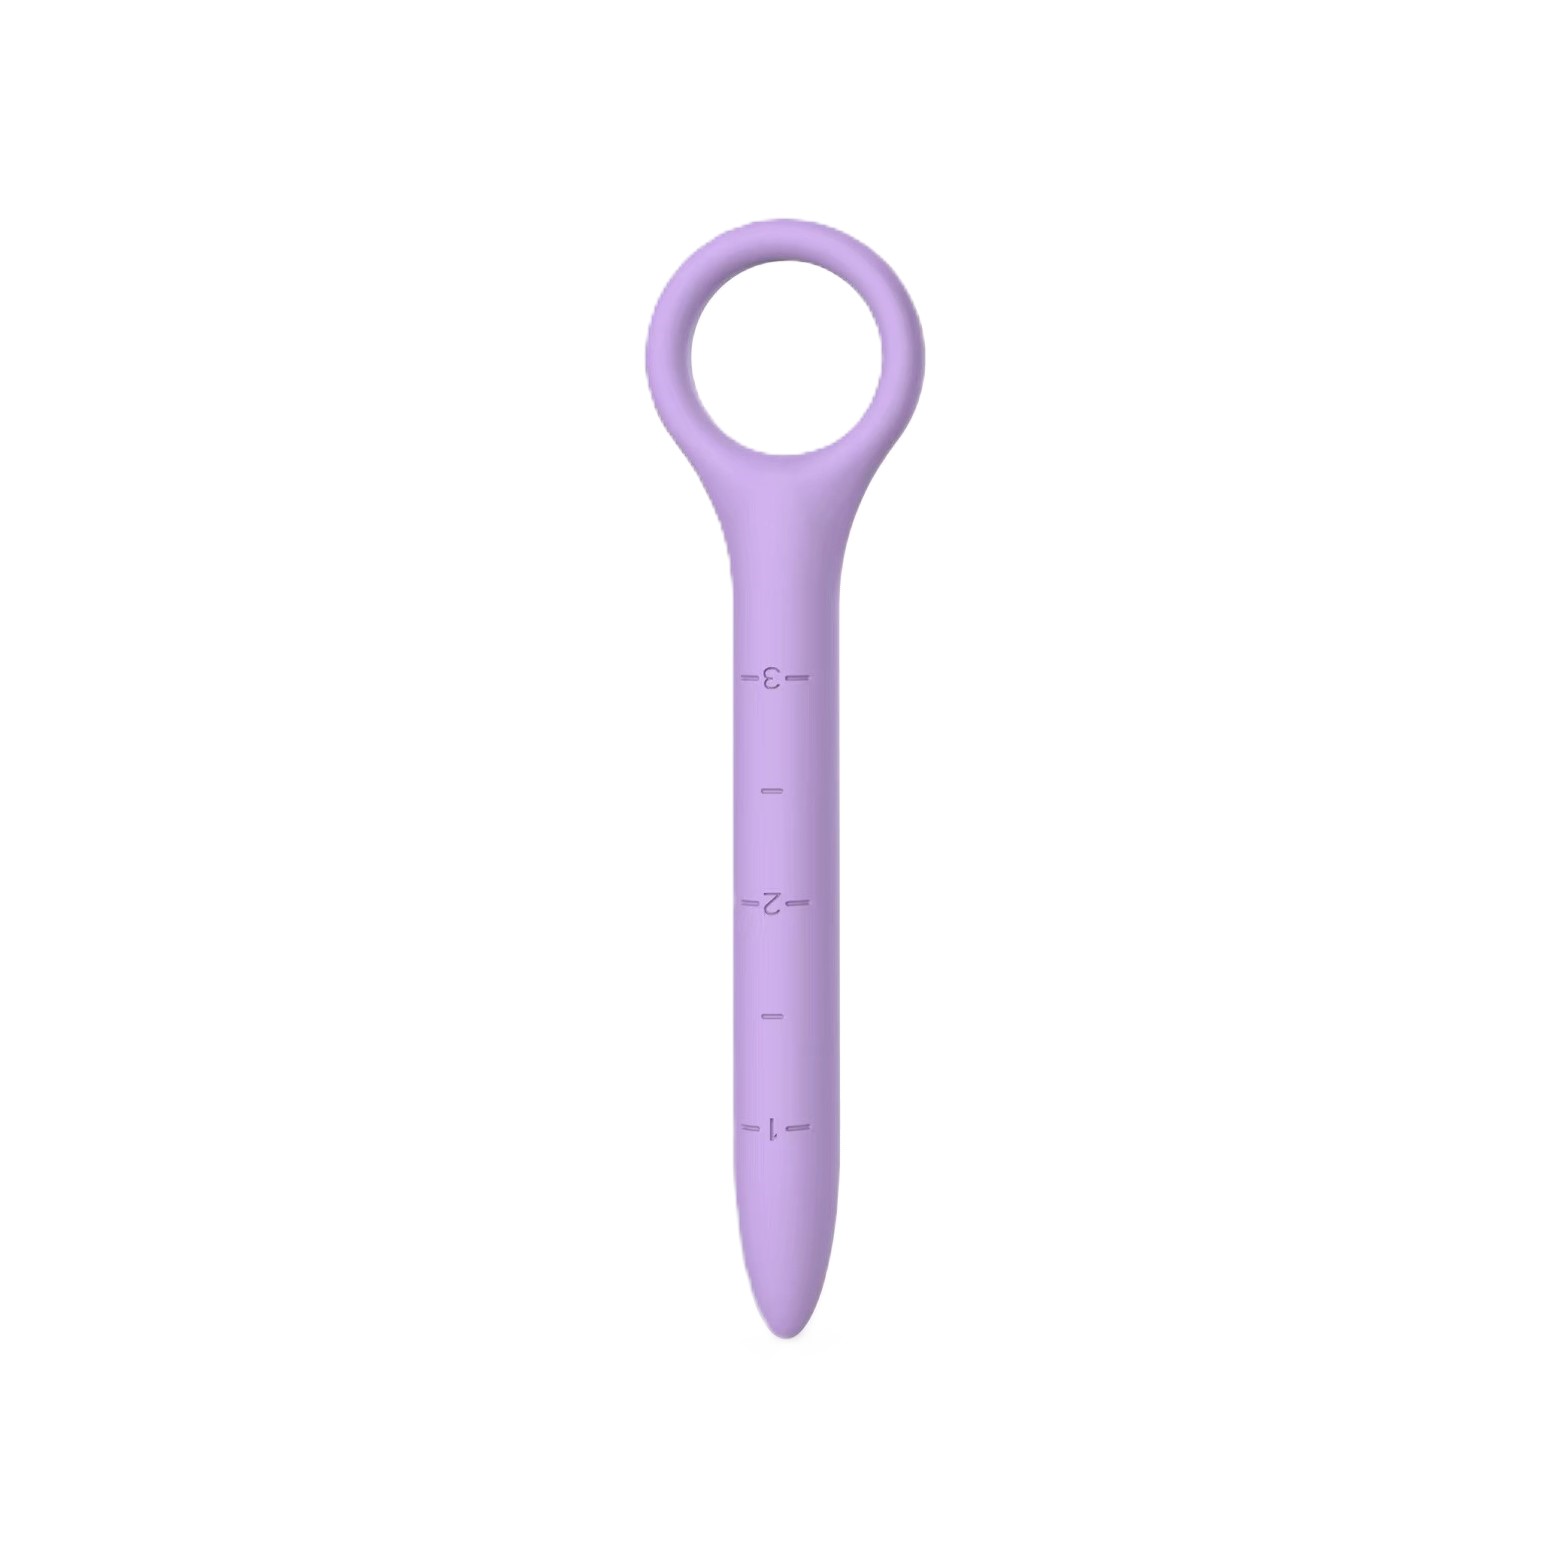 Dilatator Vaginal, Small, Silicon, Mov, 12.5 cm, Mokko Toys, Velvet Obsession